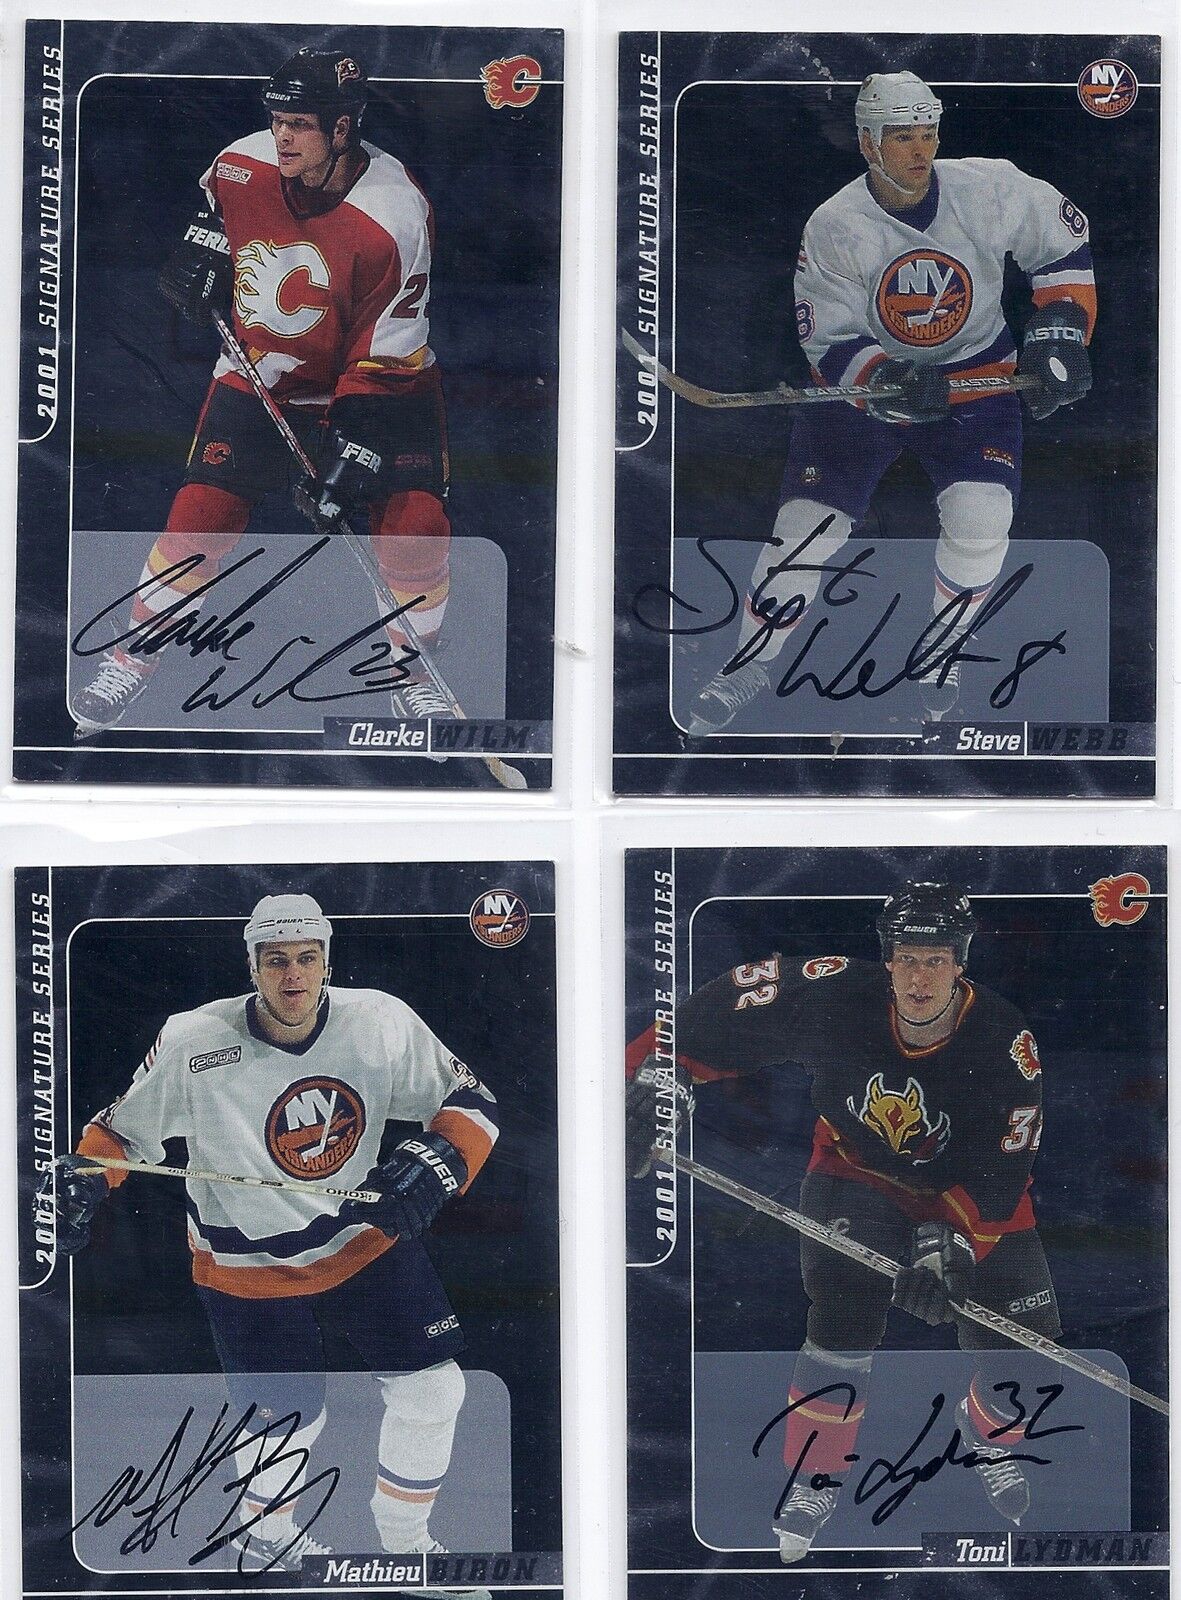 2001 ITG SS #46 Steve Webb New York Islanders Signed Autographed Card